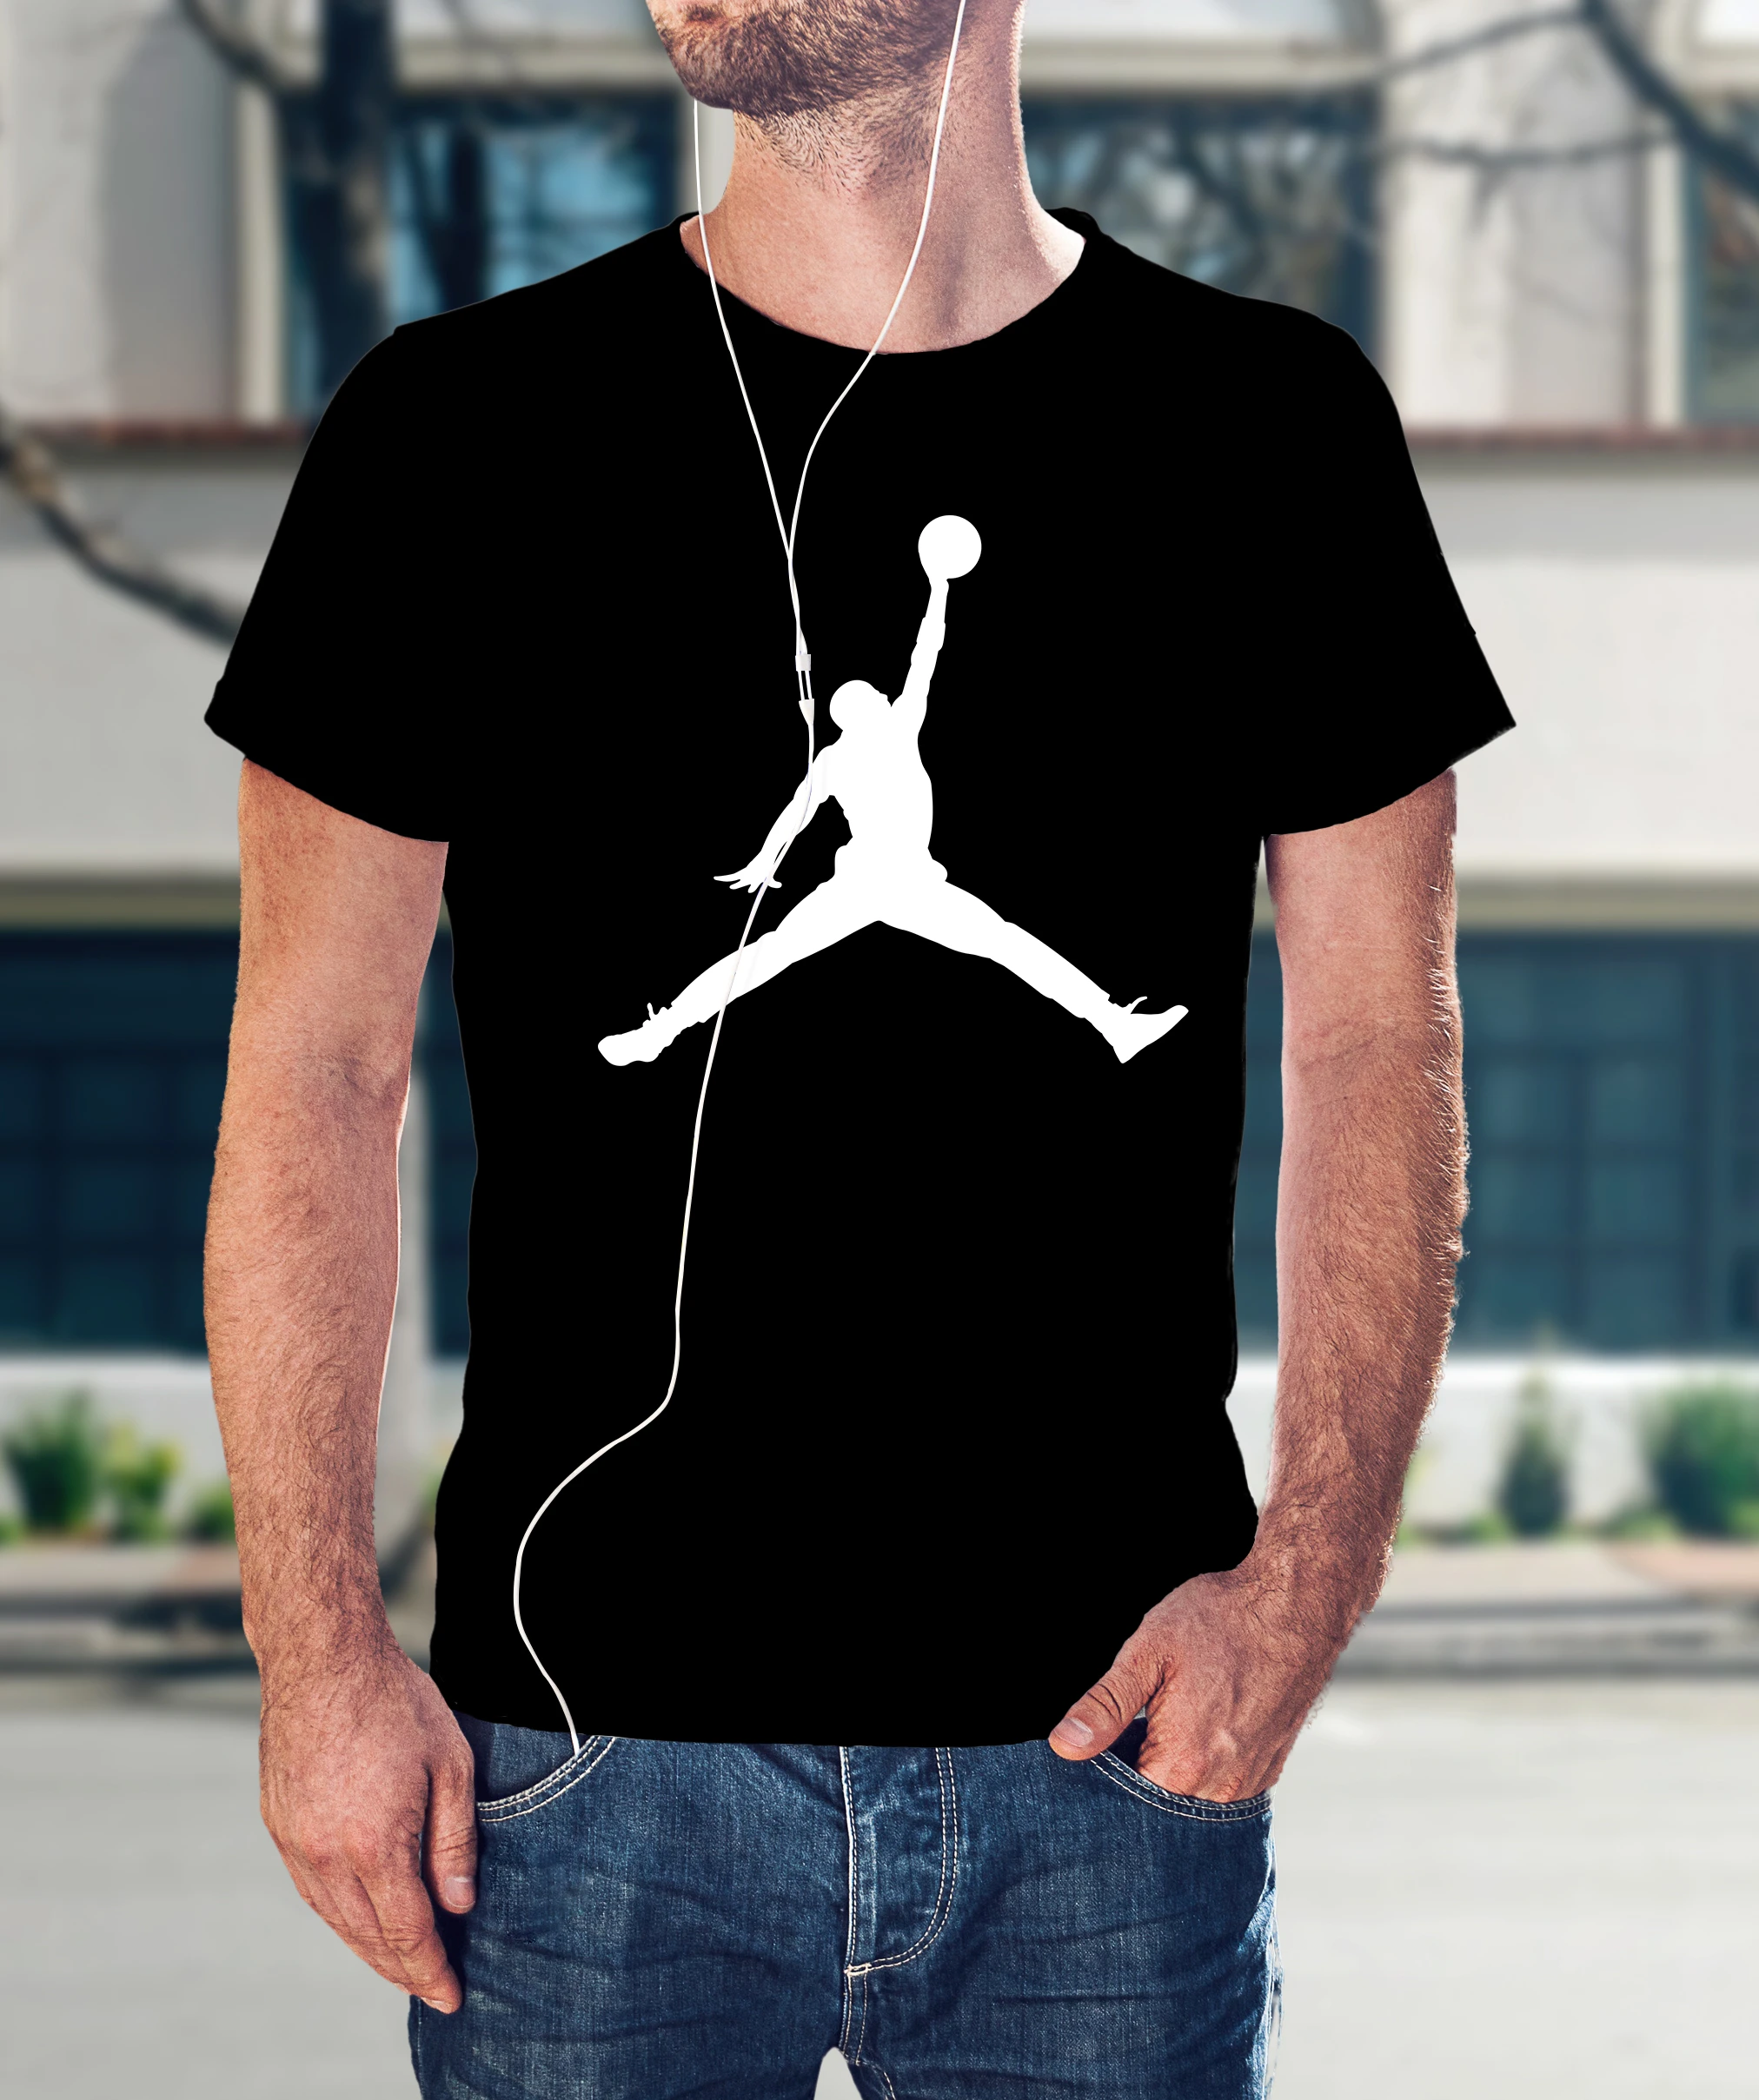 Camiseta gran tamaño hombre, camiseta de Michael Jordan, Chicago Bulls, diferentes tendencias, Nike, negro y blanco|Camisetas| - AliExpress